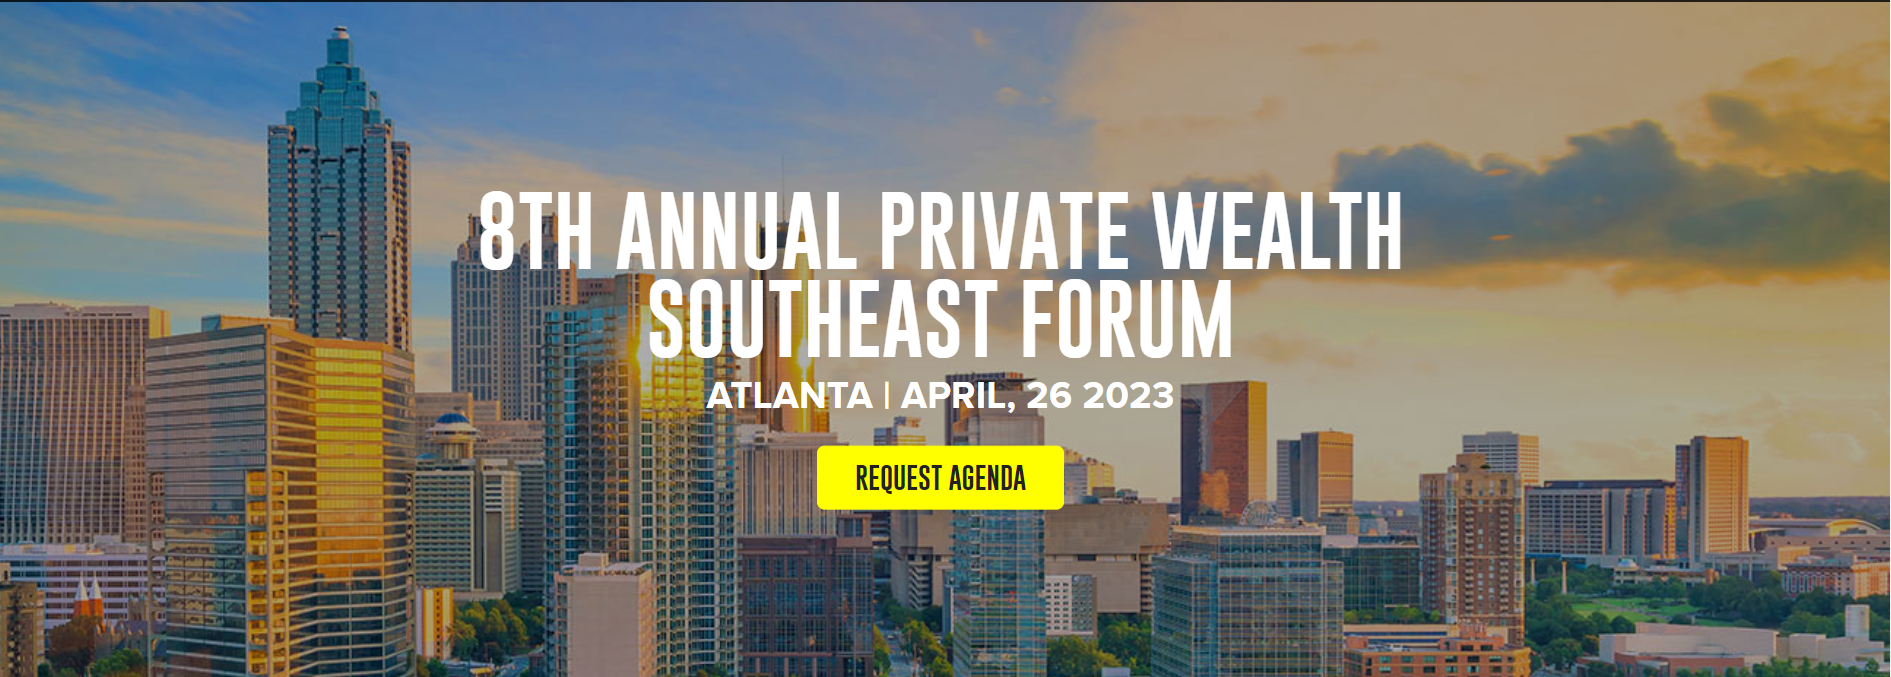 8th Annual Private Wealth Southeast Forum